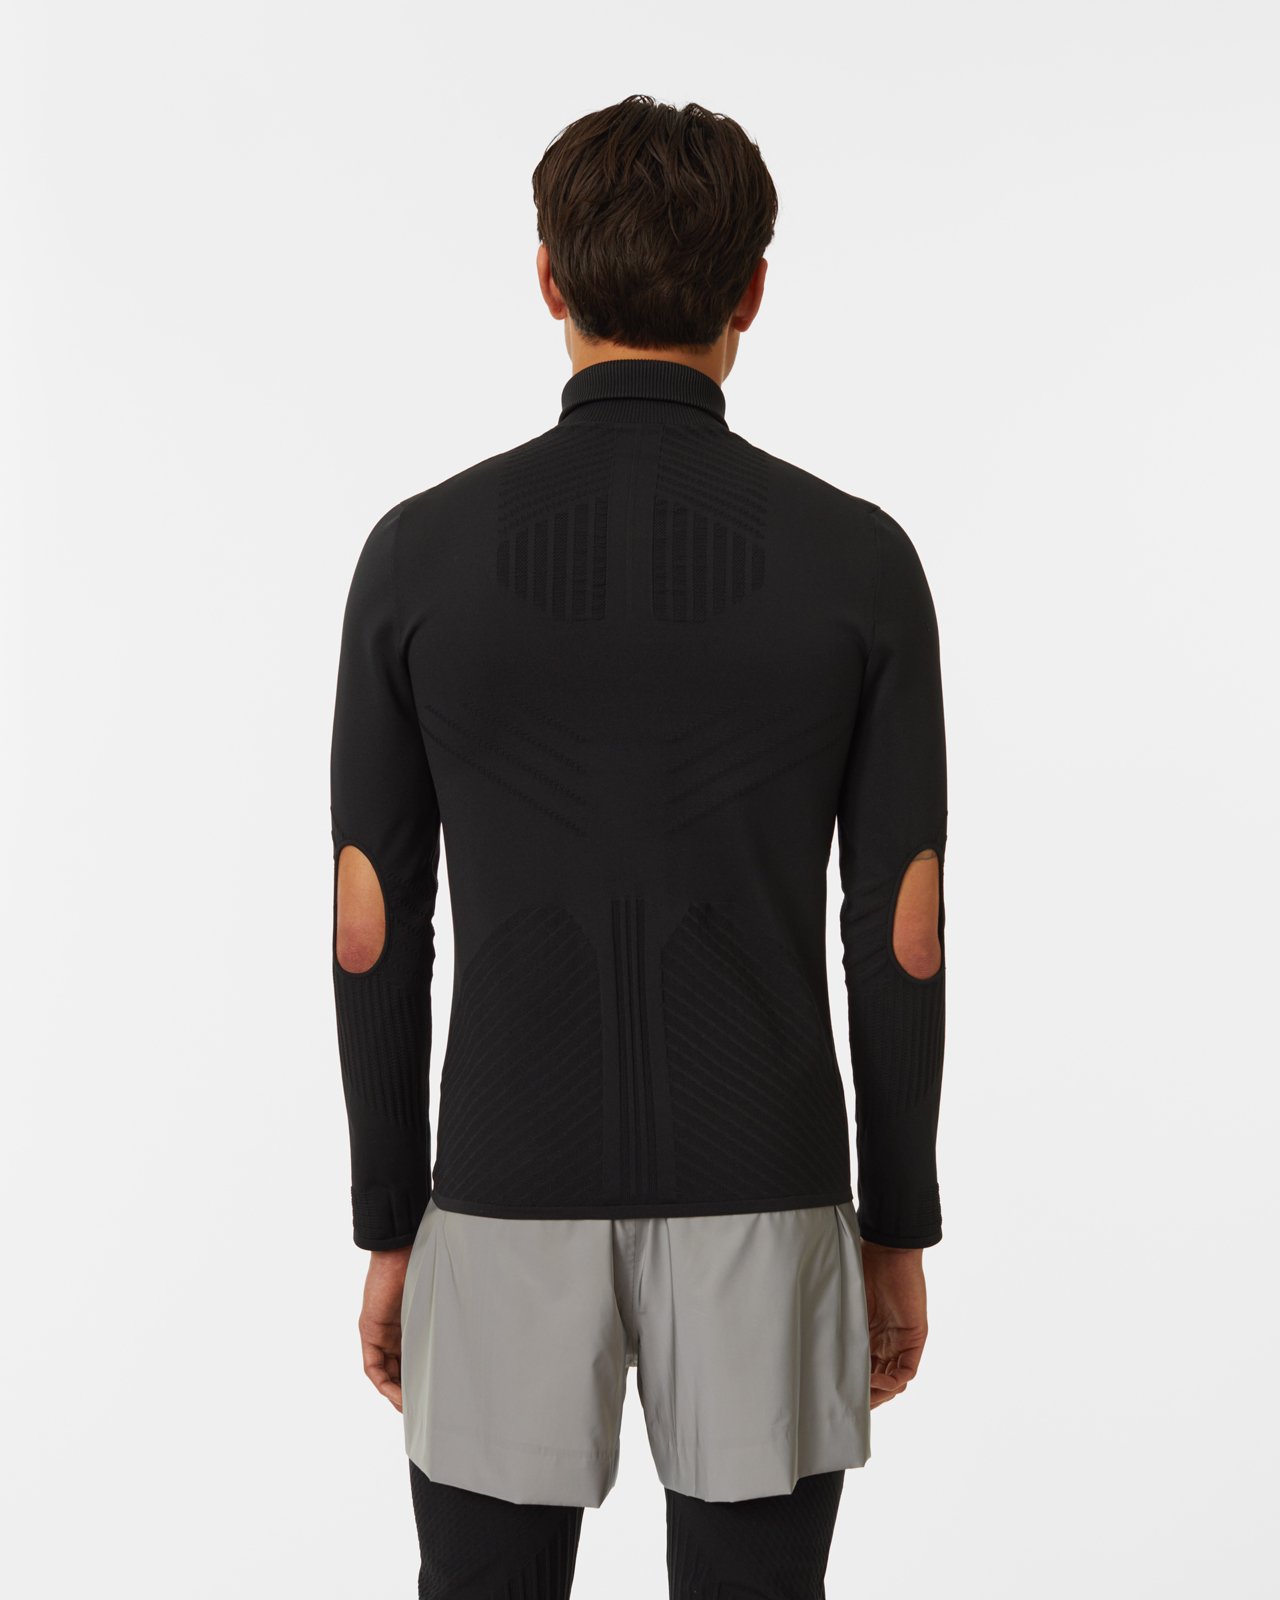 Prada - Knitted Nylon Top - Clothing - Black - Image 3